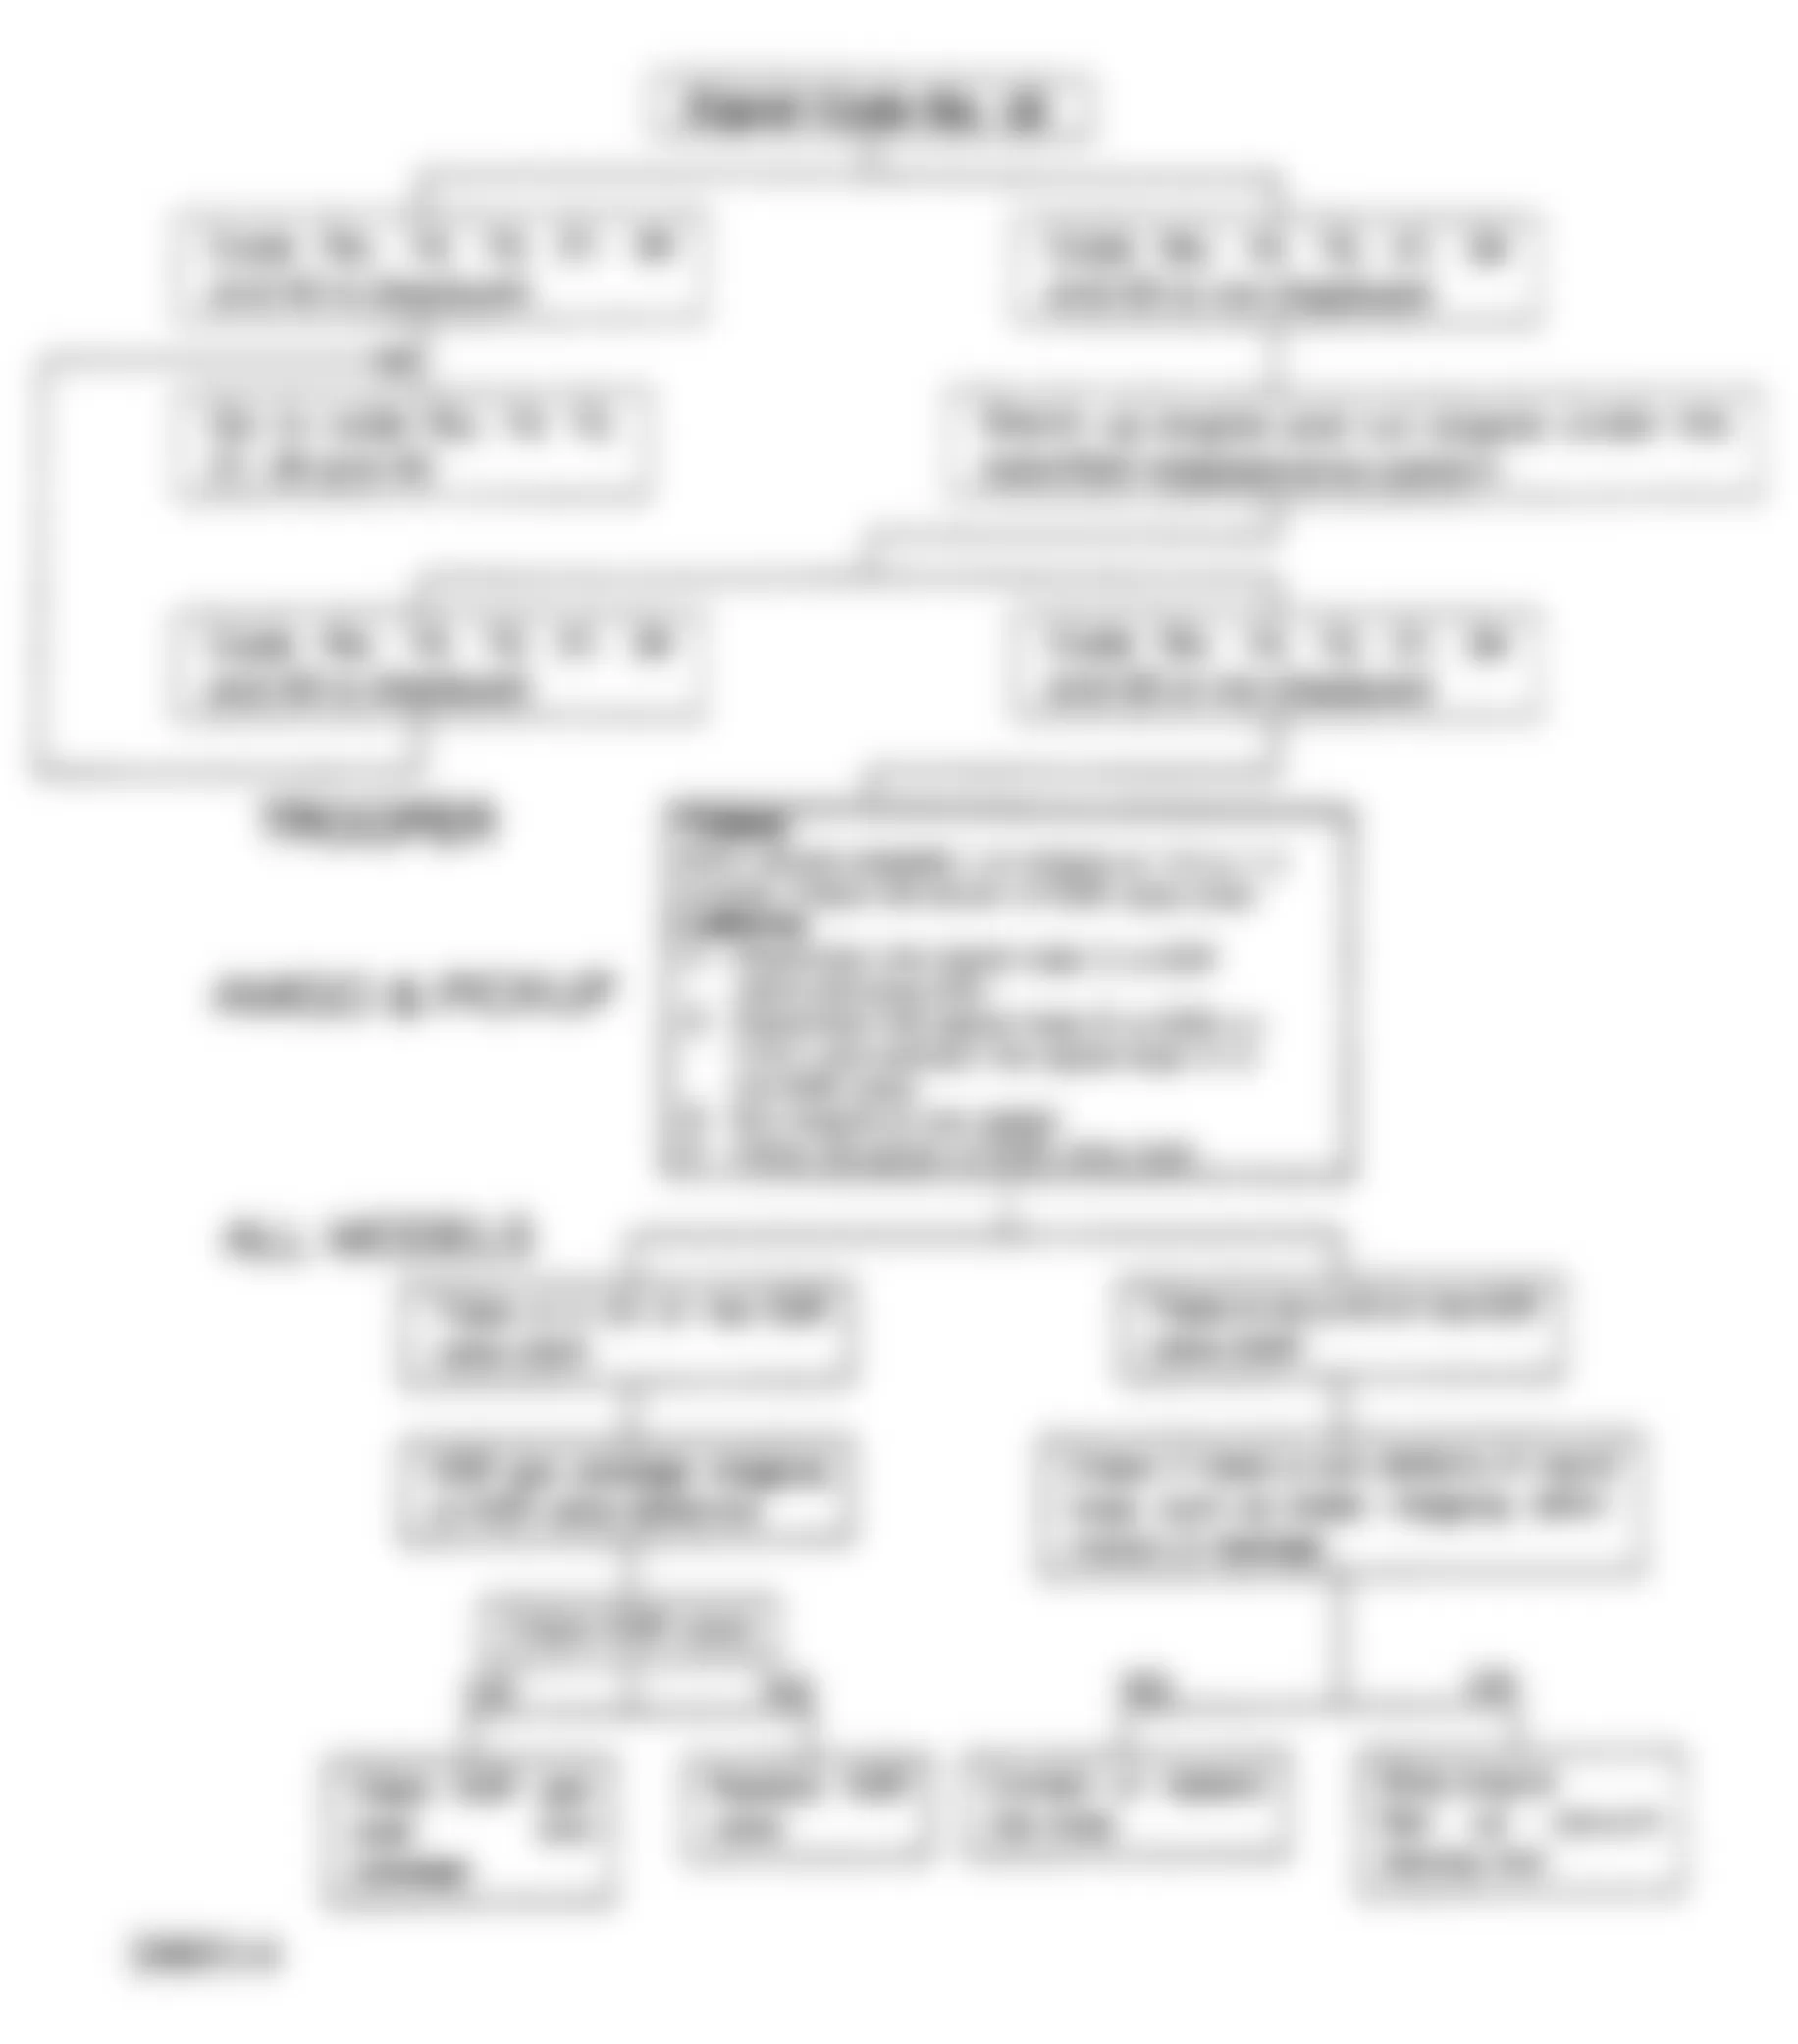 Isuzu Amigo S 1990 - Component Locations -  Code 32: Flow Chart (1 of 2), EGR System Malfunction